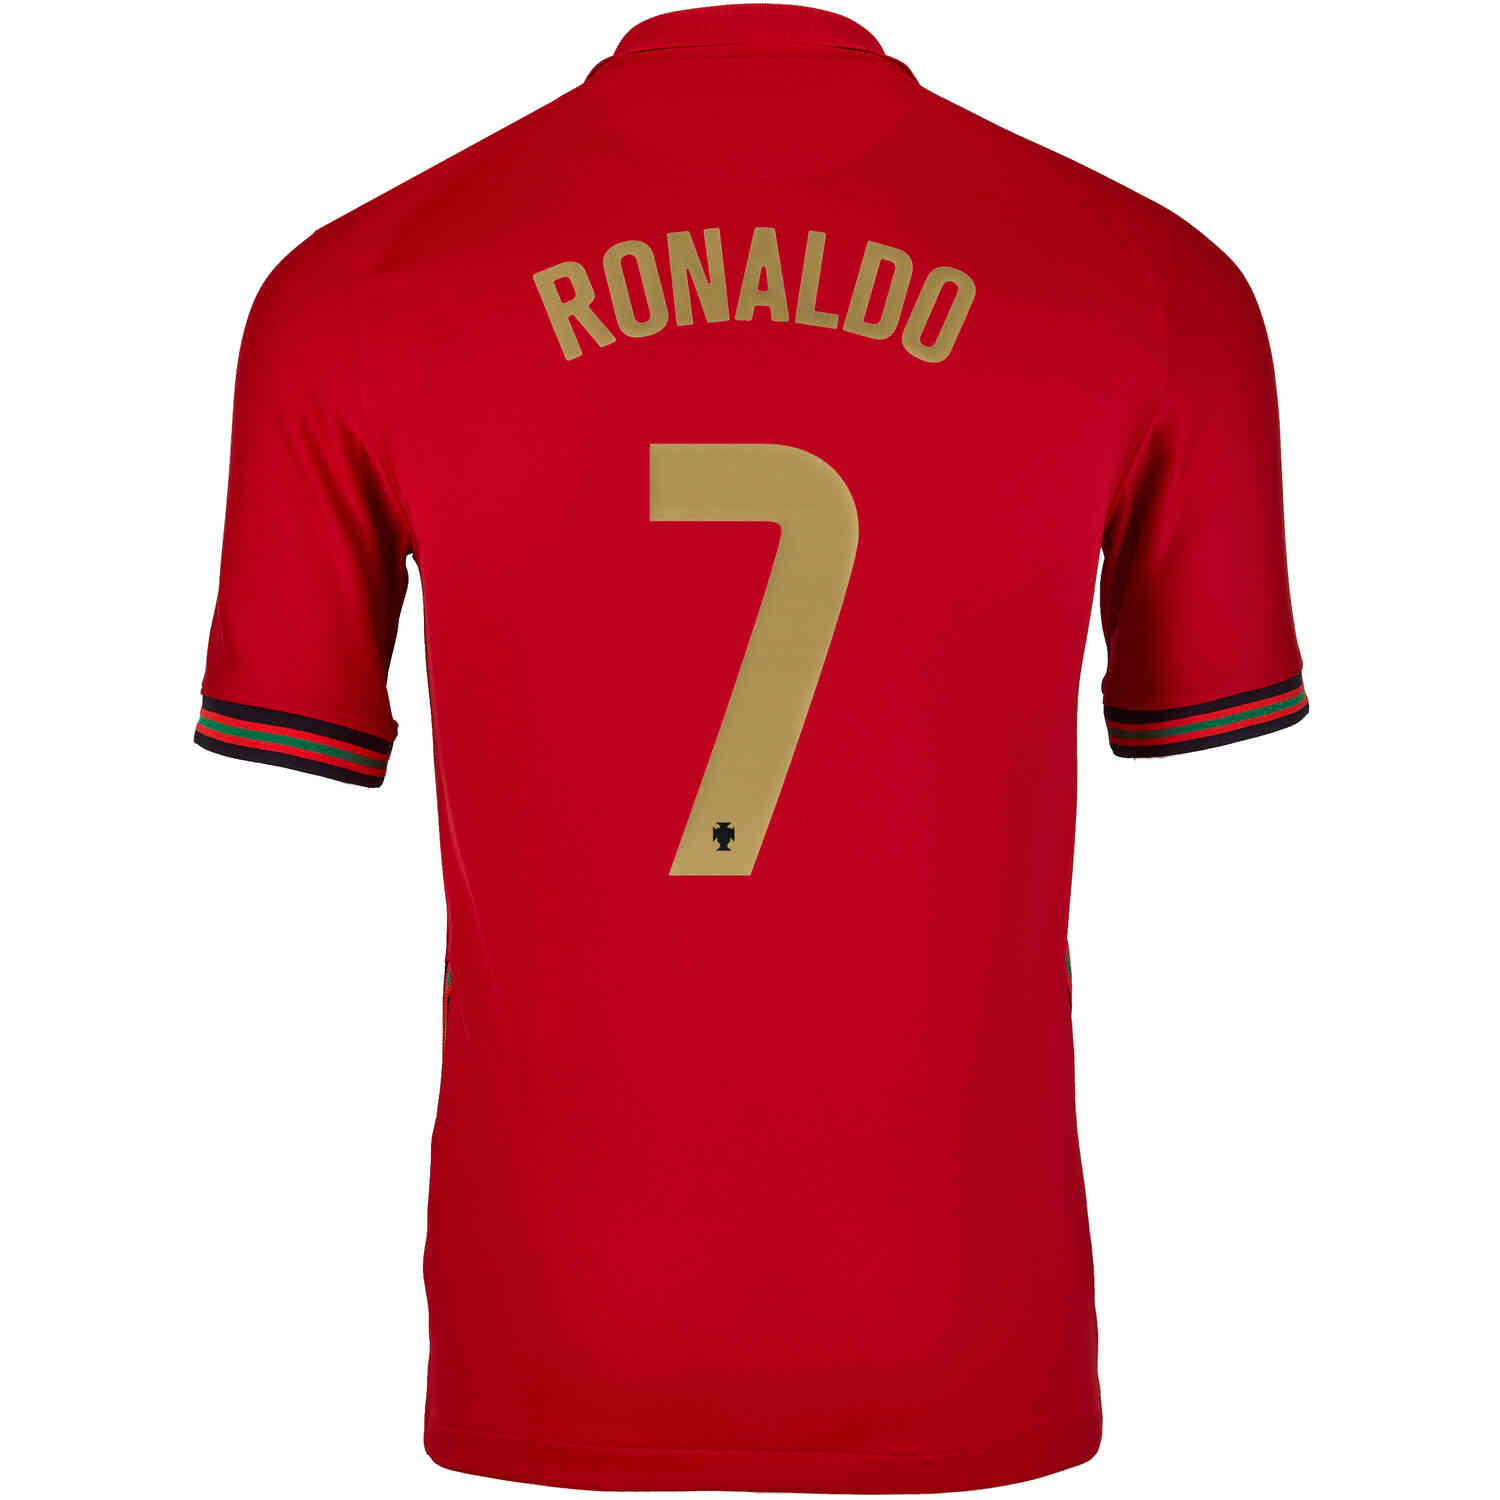 Cristiano Ronaldo Authentic Portugal Jersey Image to u